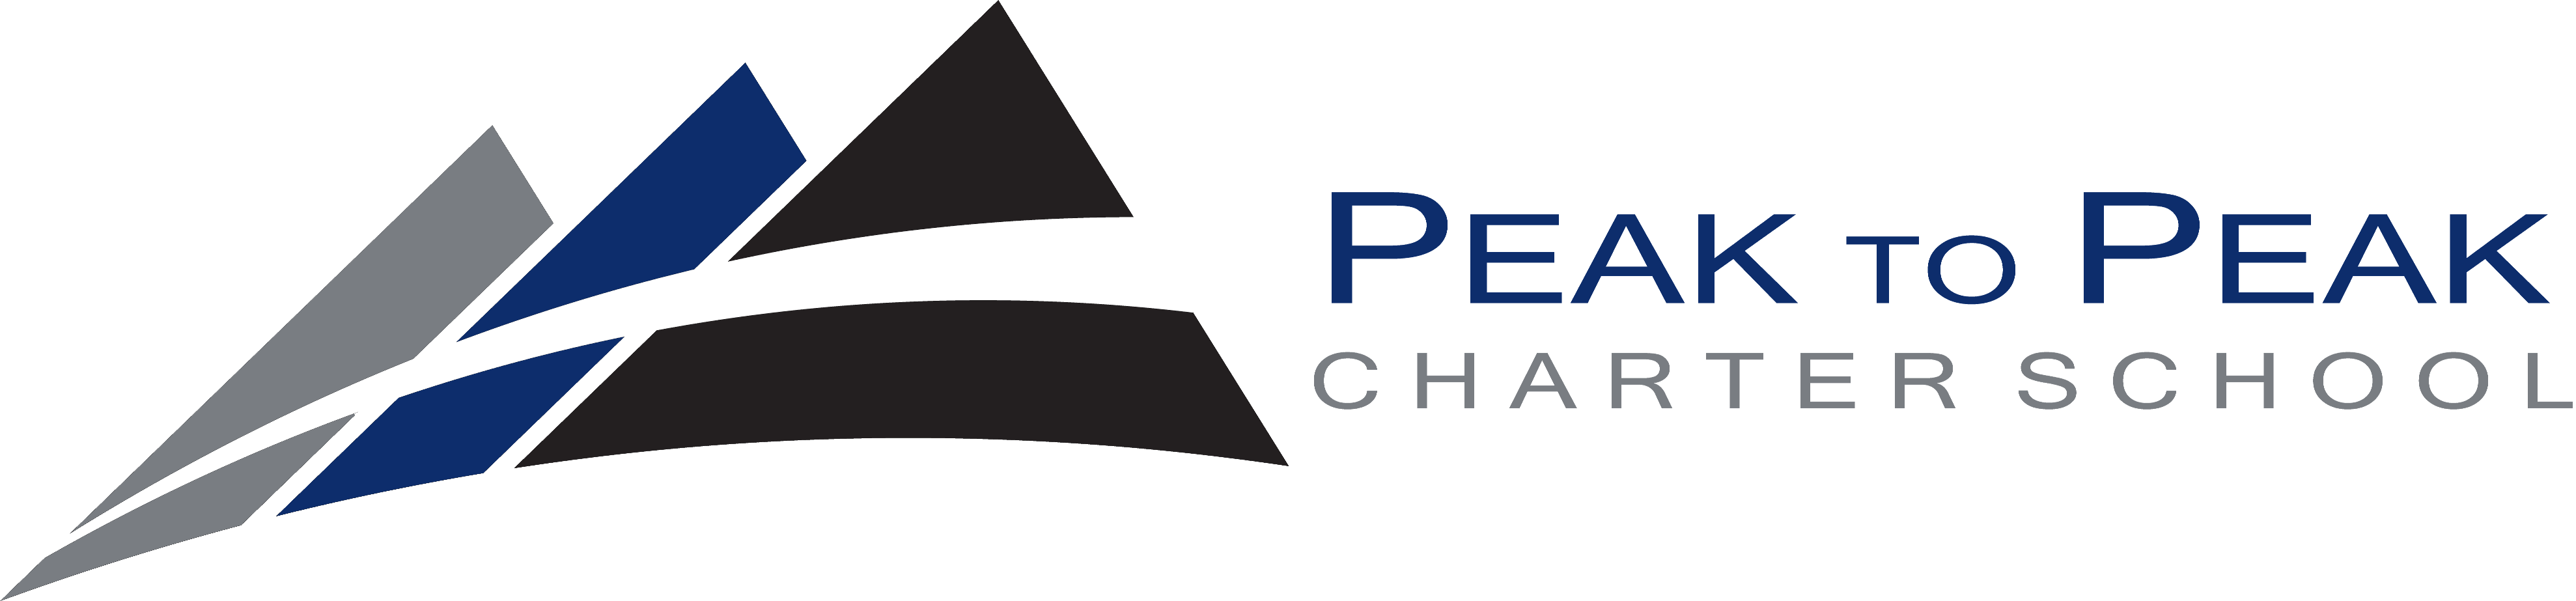 Organization logo of Peak to Peak Charter School